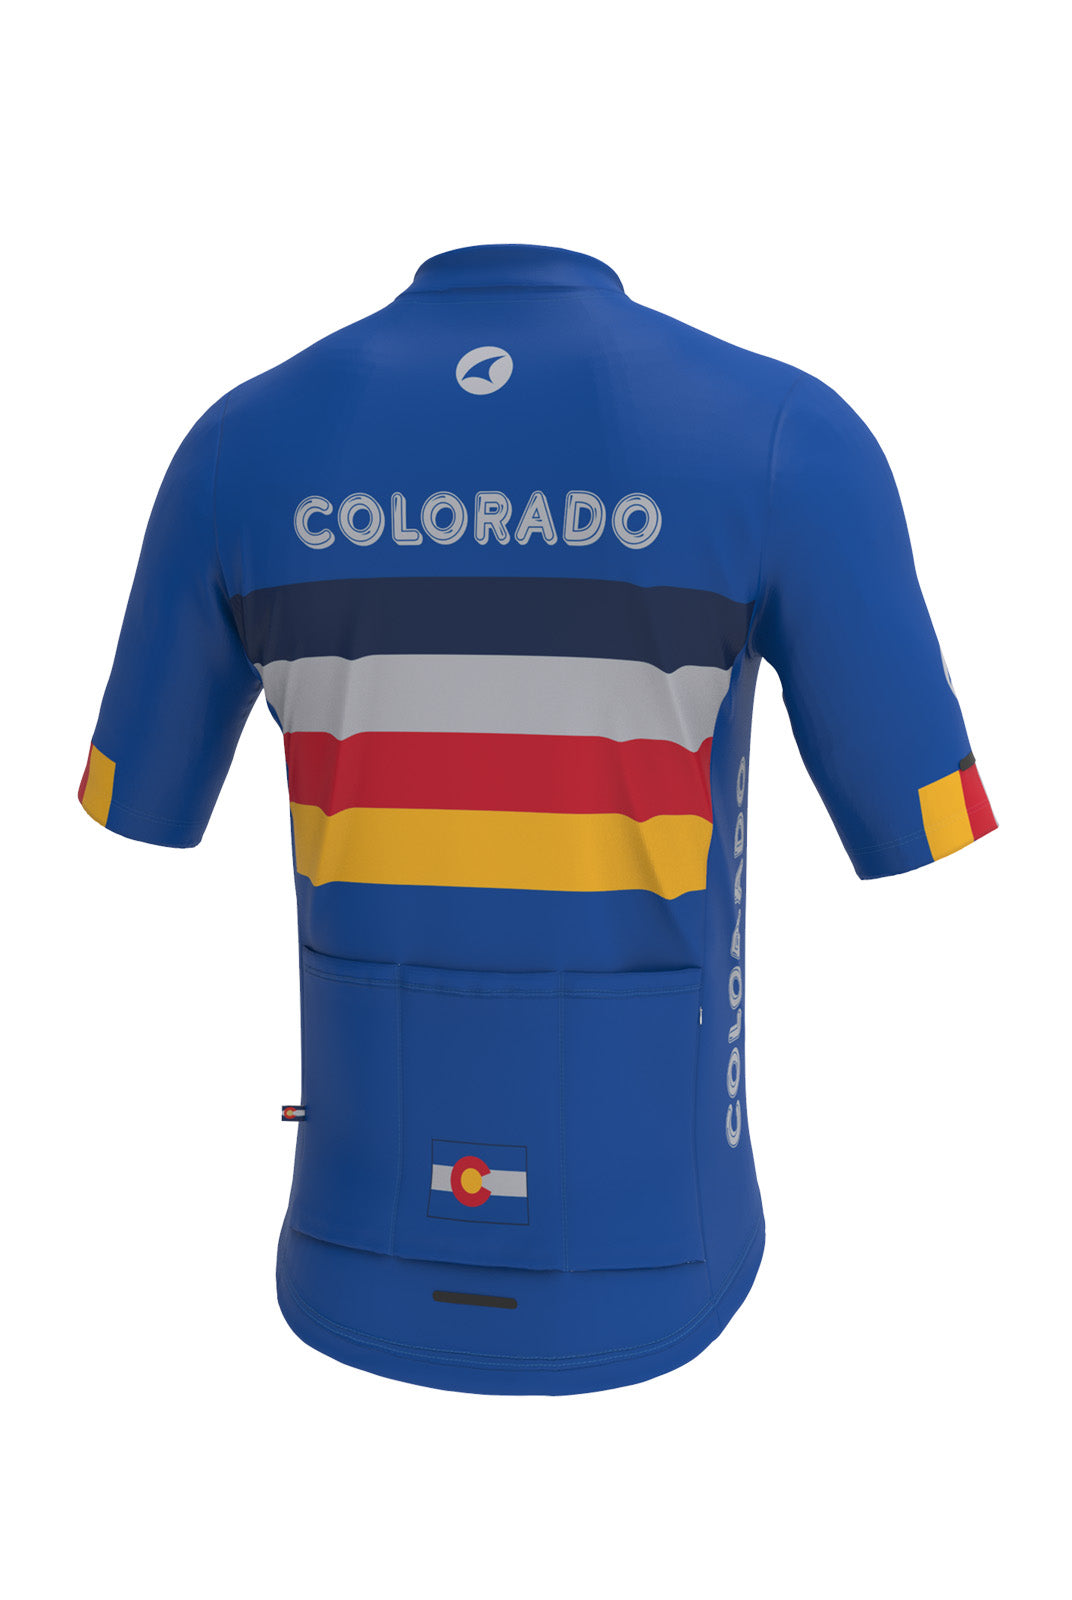 Men's Retro Blue Colorado Cycling Jersey - Ascent Back View